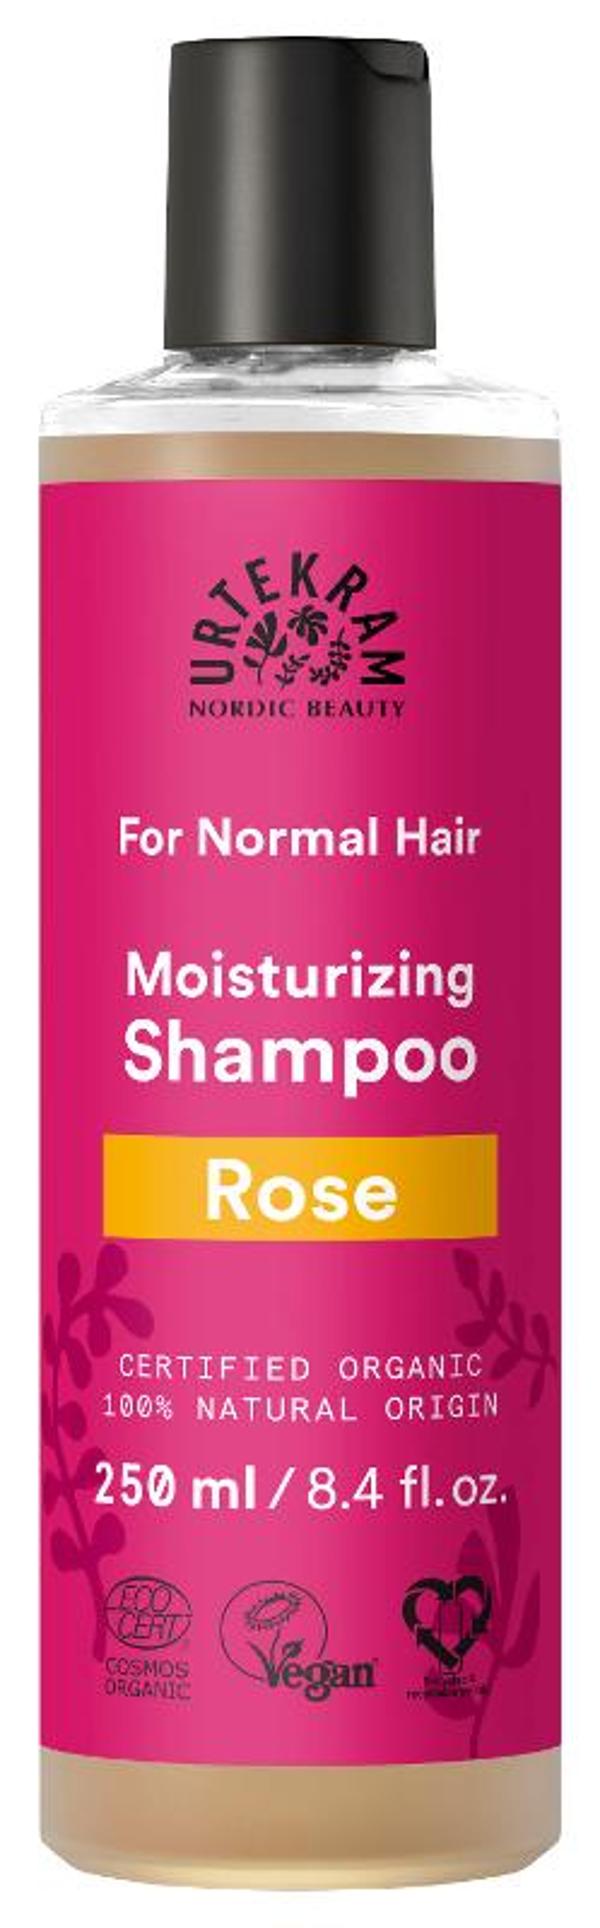 Produktfoto zu Moisturizing Shampoo Rose